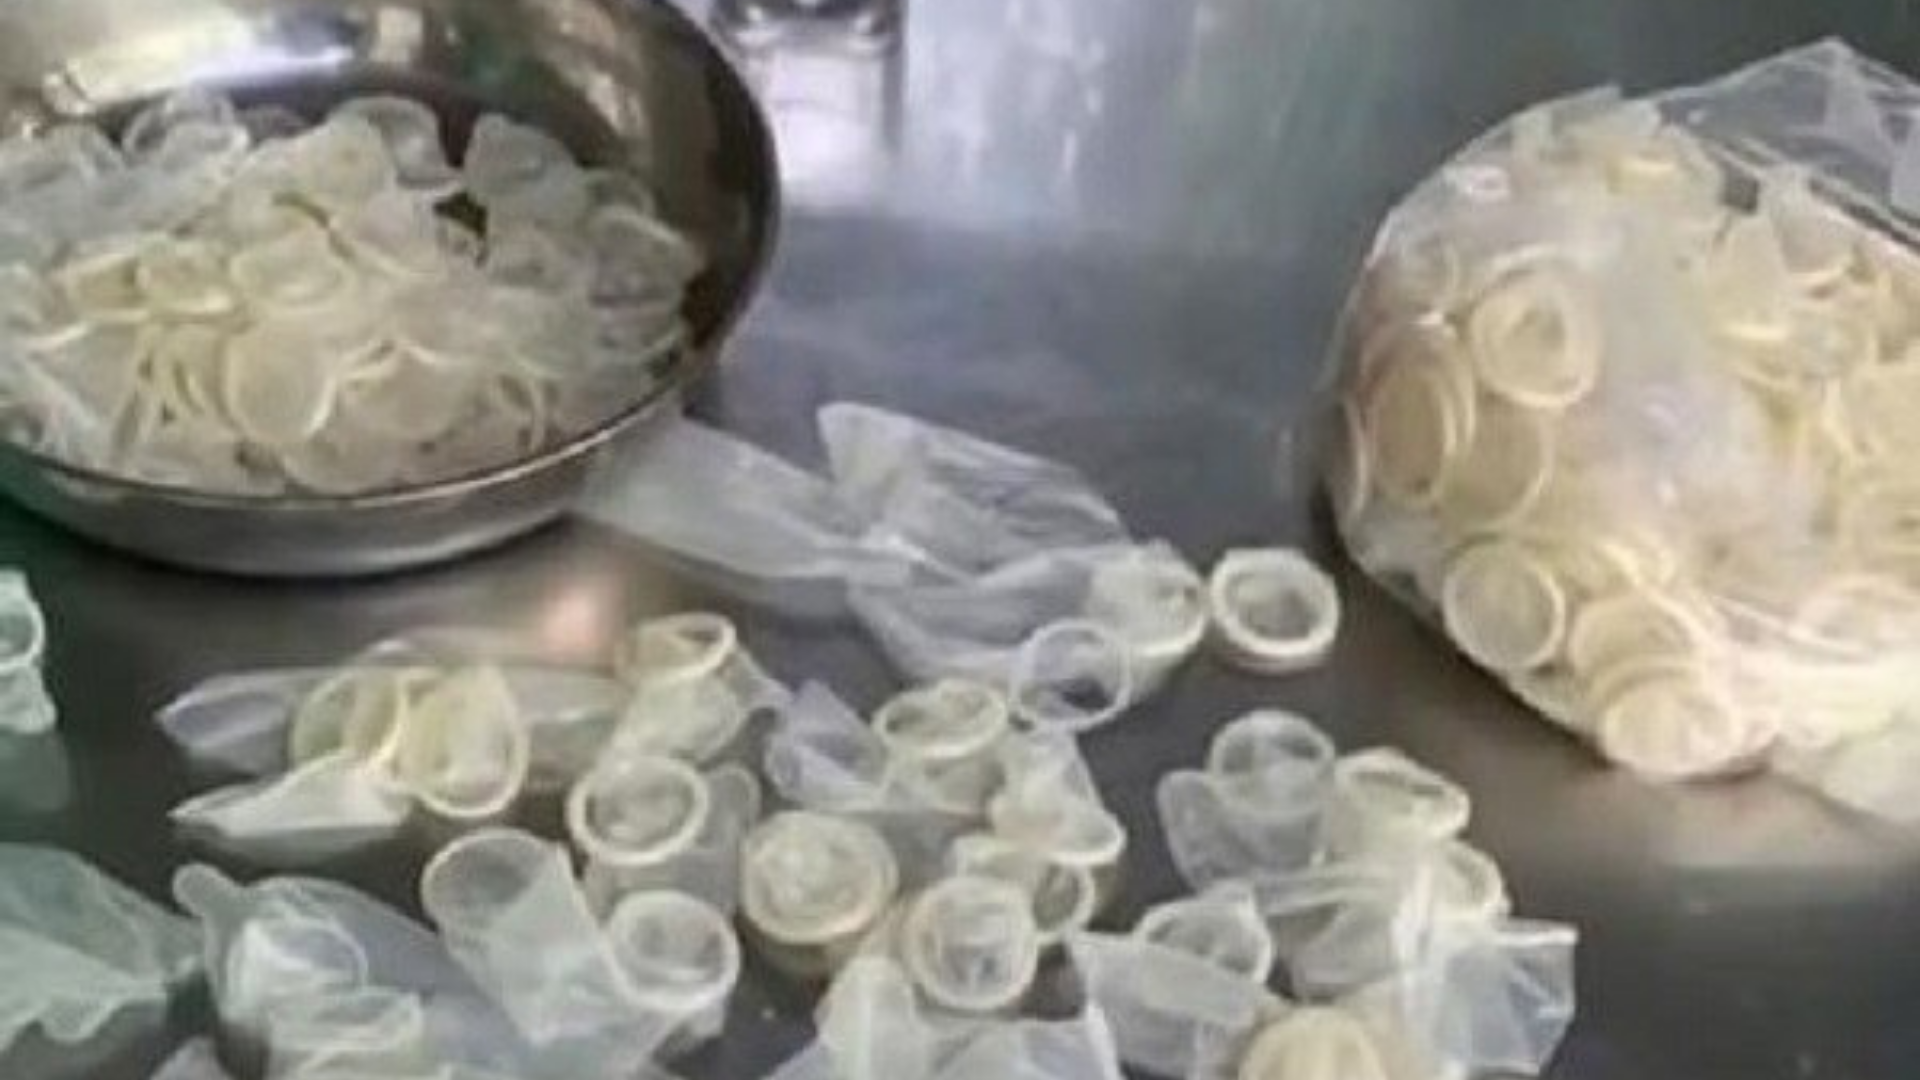 Descubren almacén que limpiaba condones usados para revenderlos